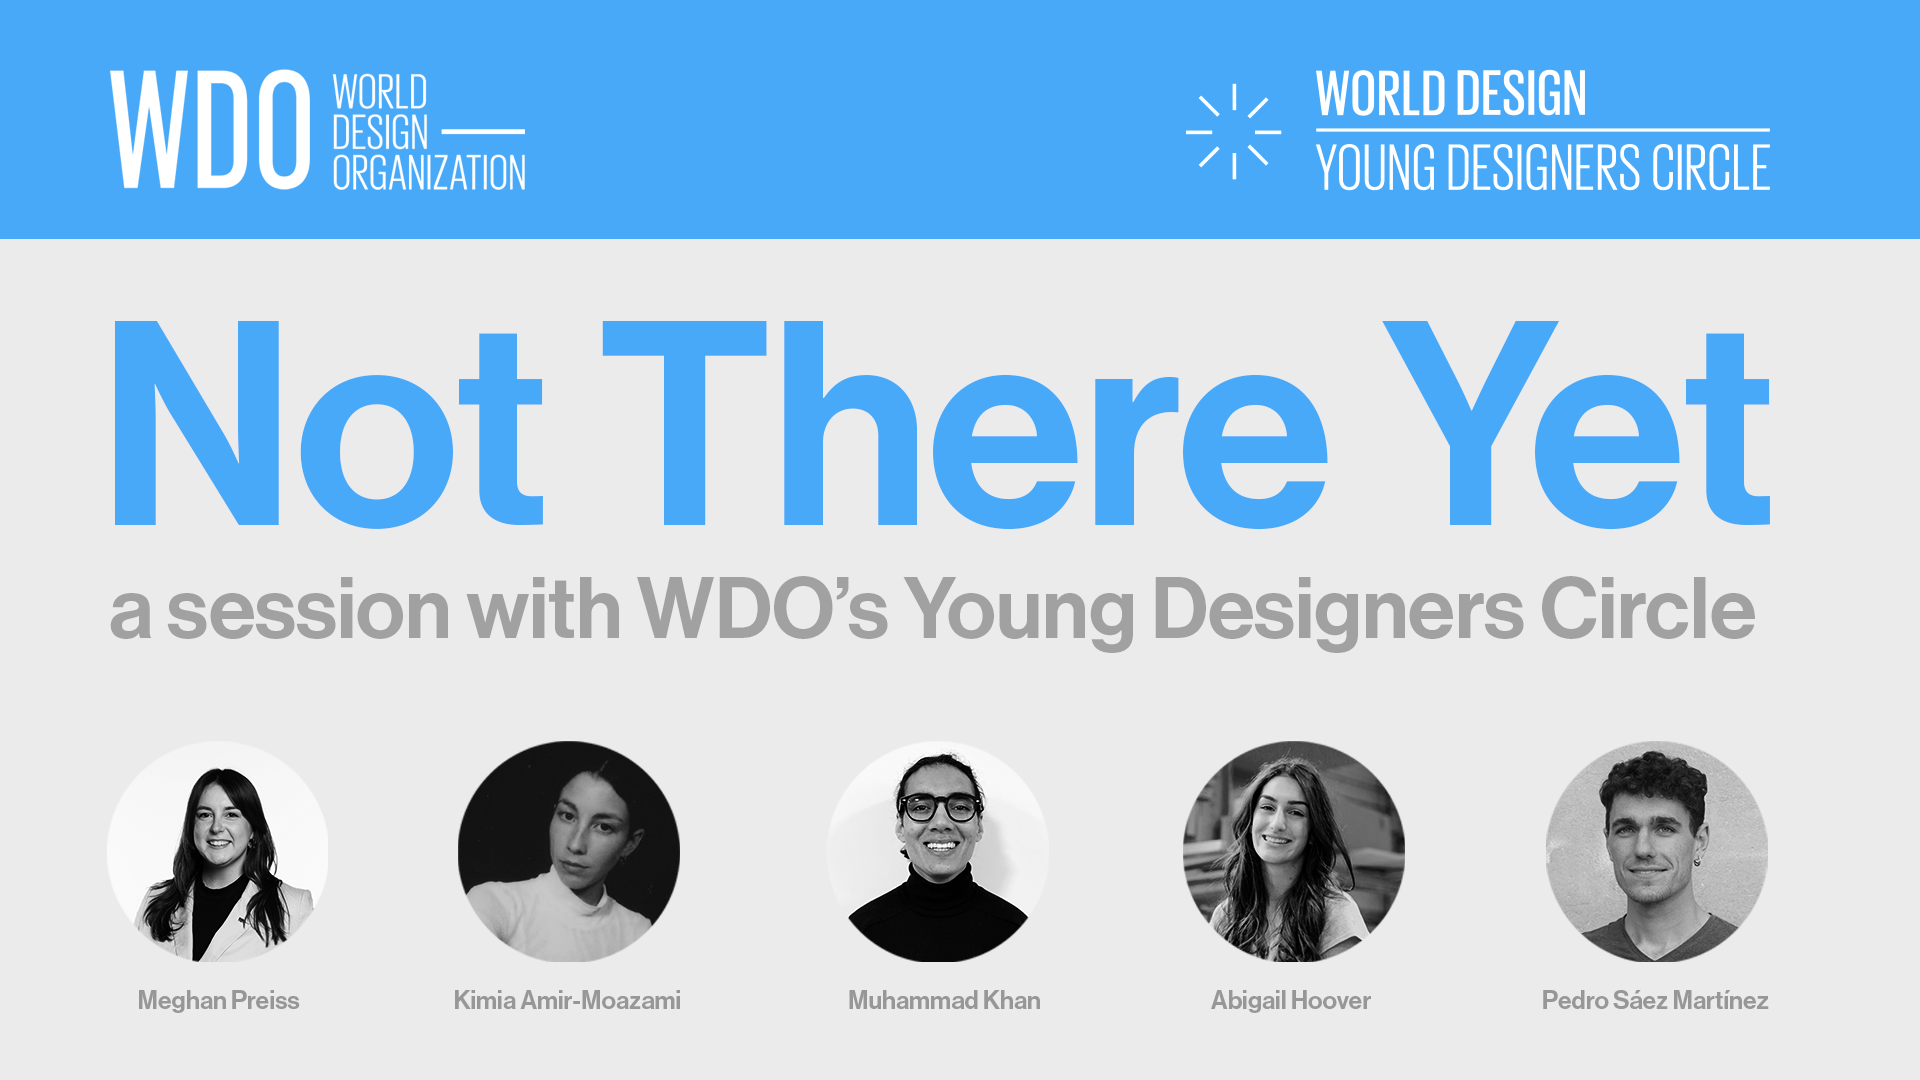 iF Design Marathon 2022 - World Design Organization (WDO) - Young Designers Circle